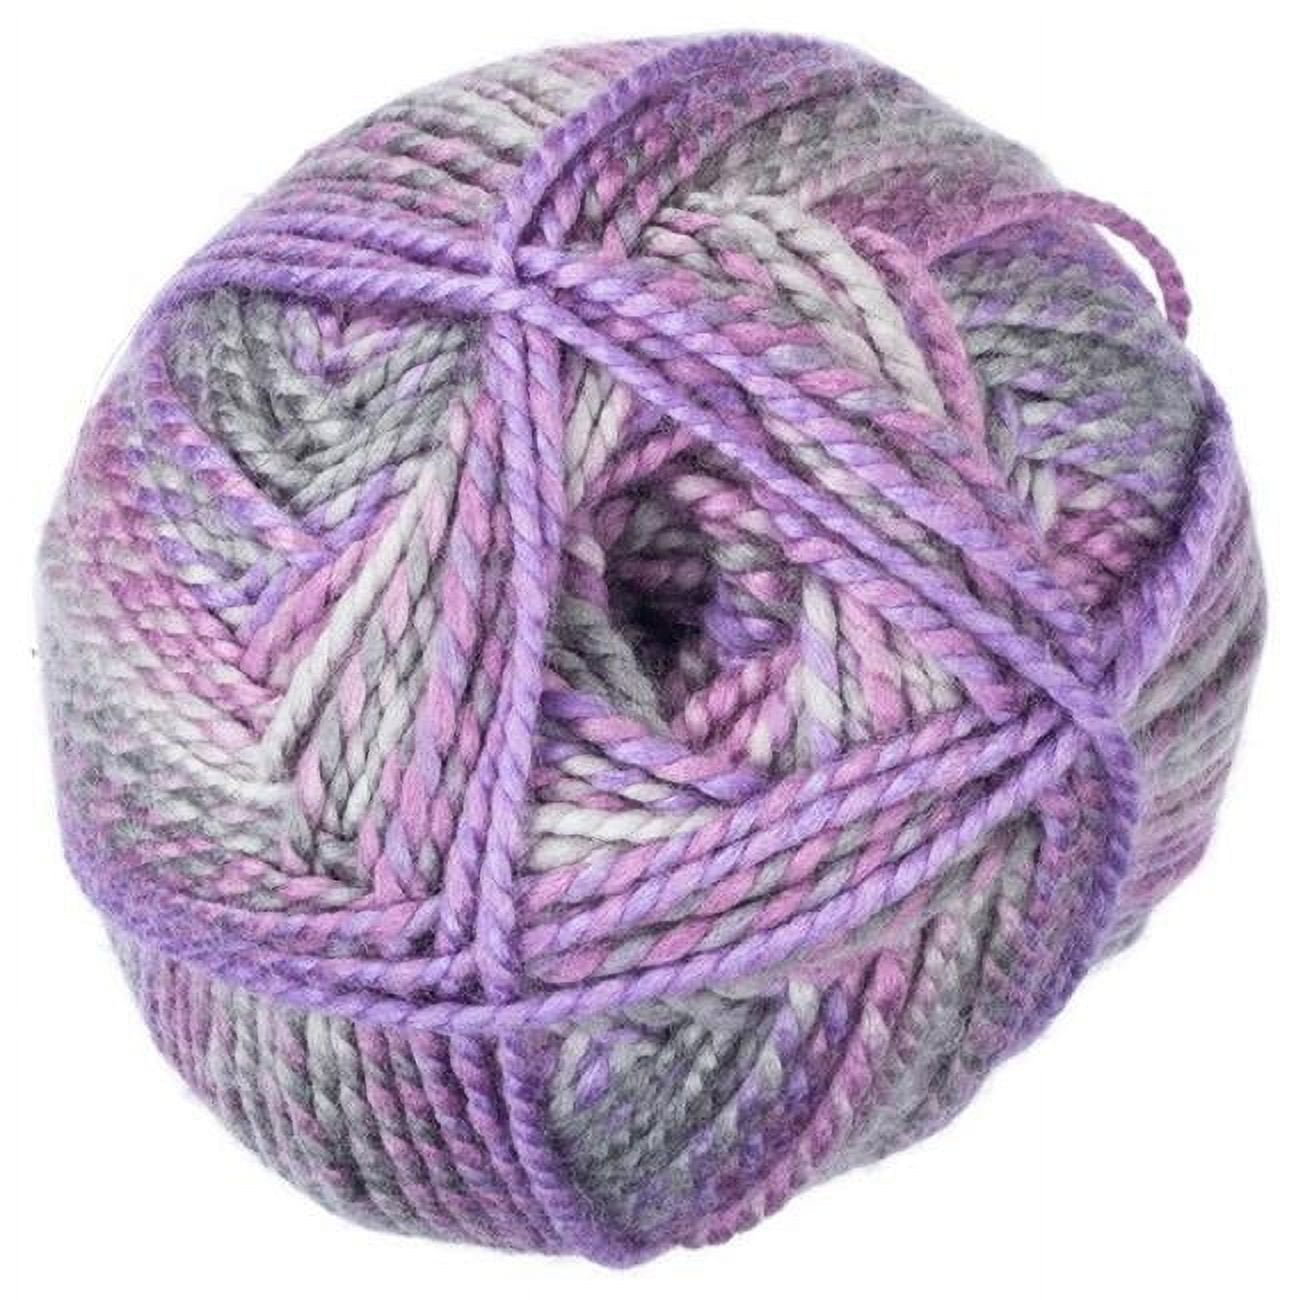 Gem Stone Glue 60ml Buy Wool, Yarn, Needles, Patterns today